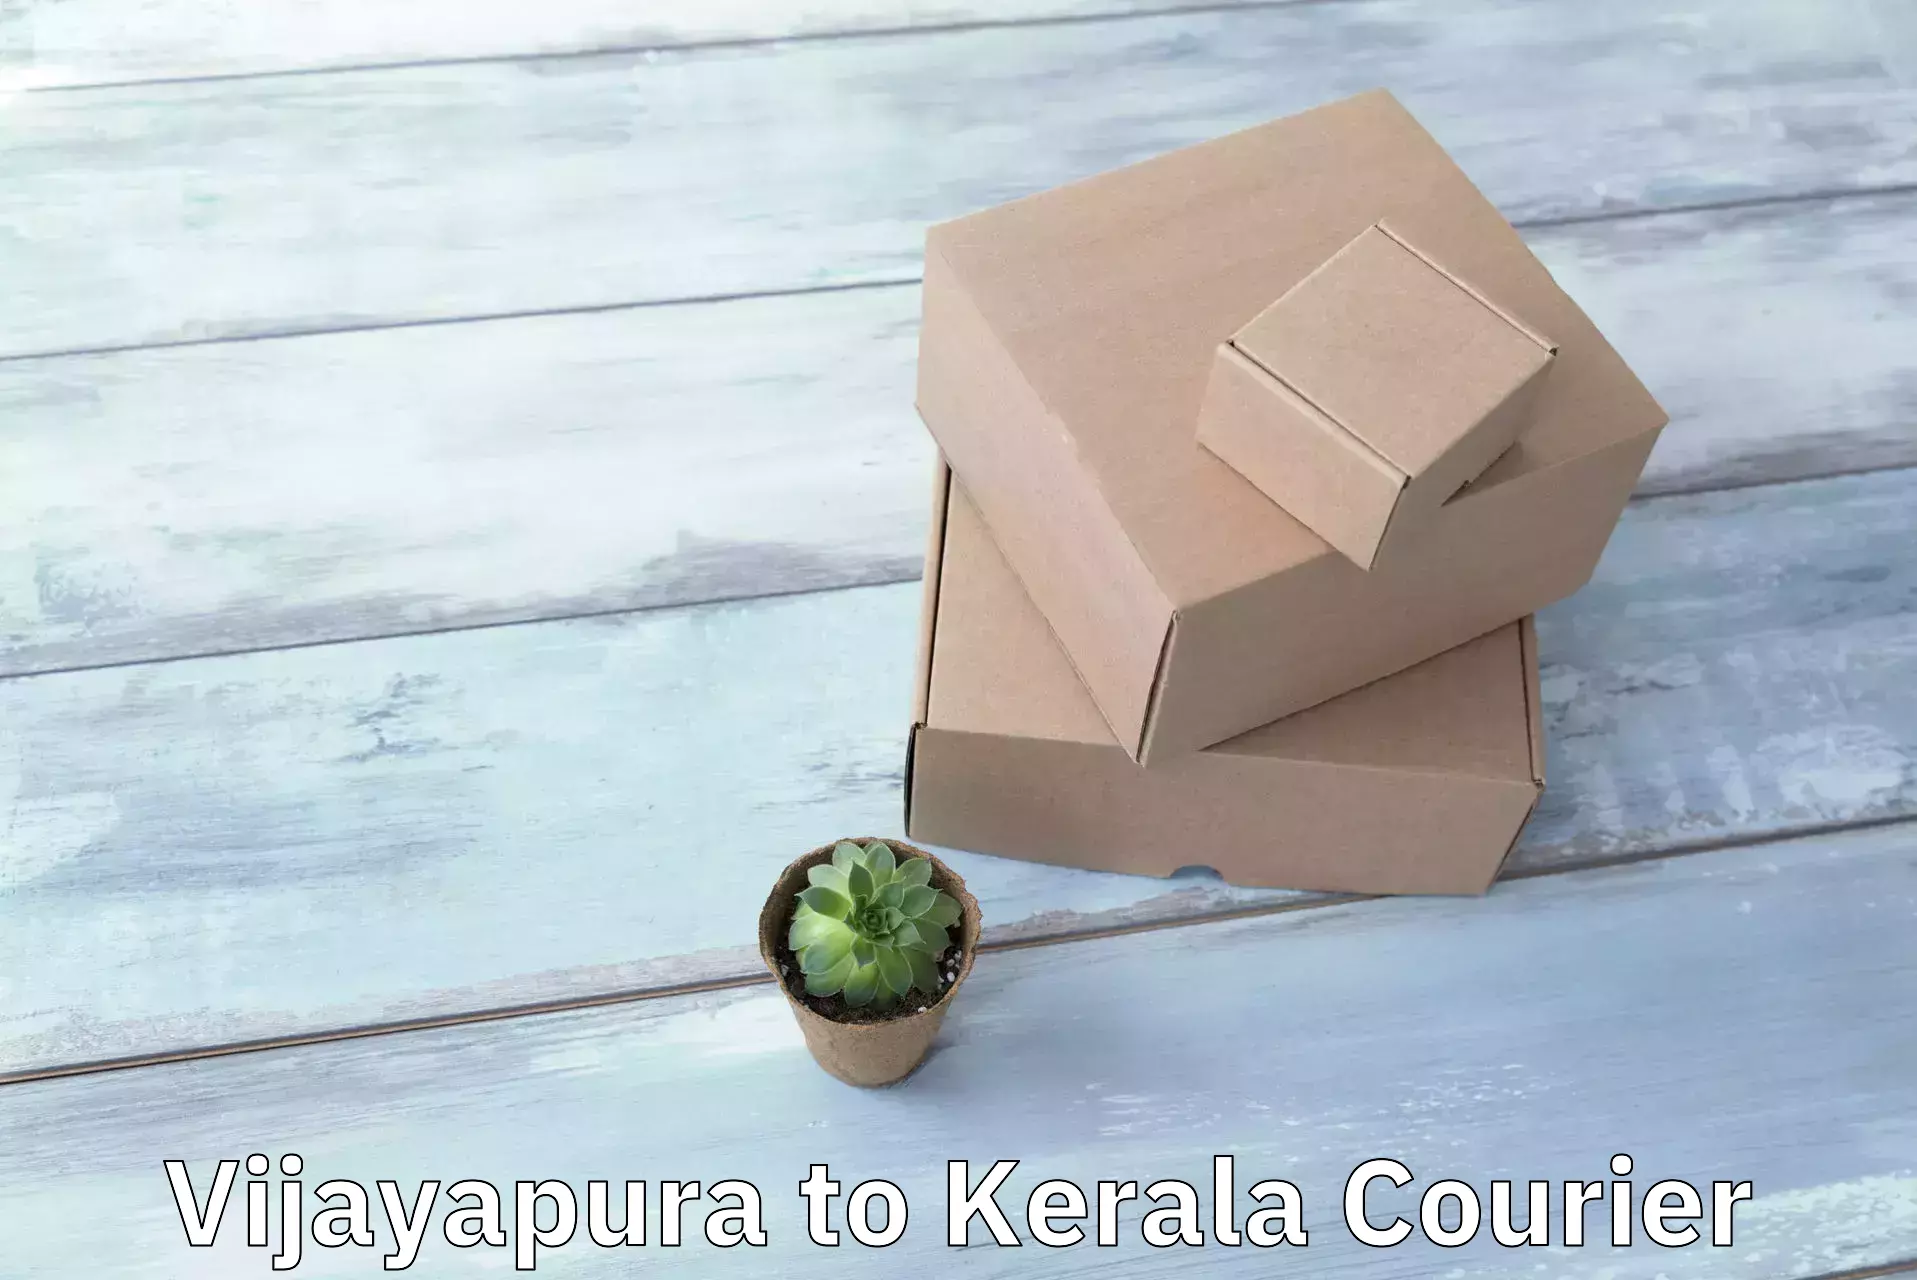 Courier service comparison Vijayapura to Kerala